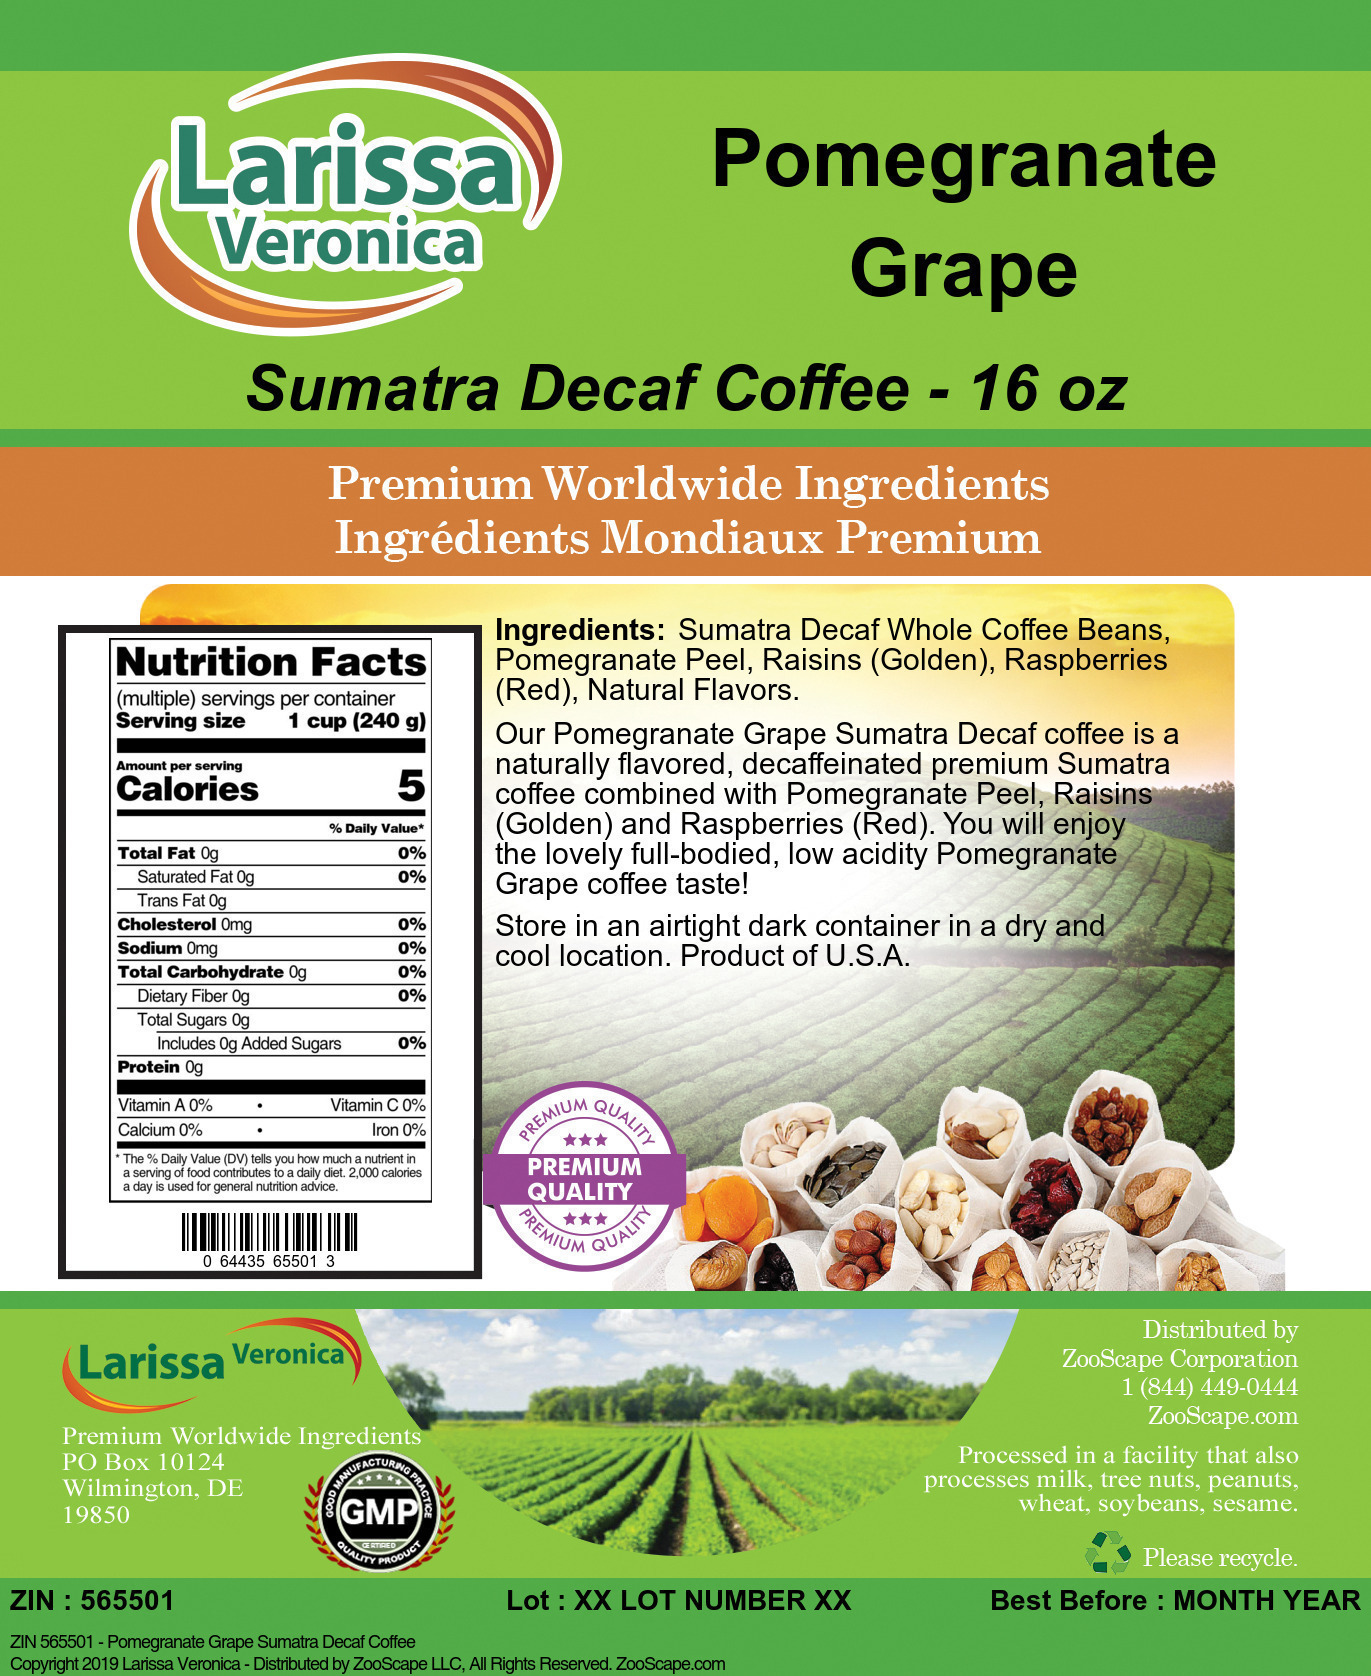 Pomegranate Grape Sumatra Decaf Coffee - Label